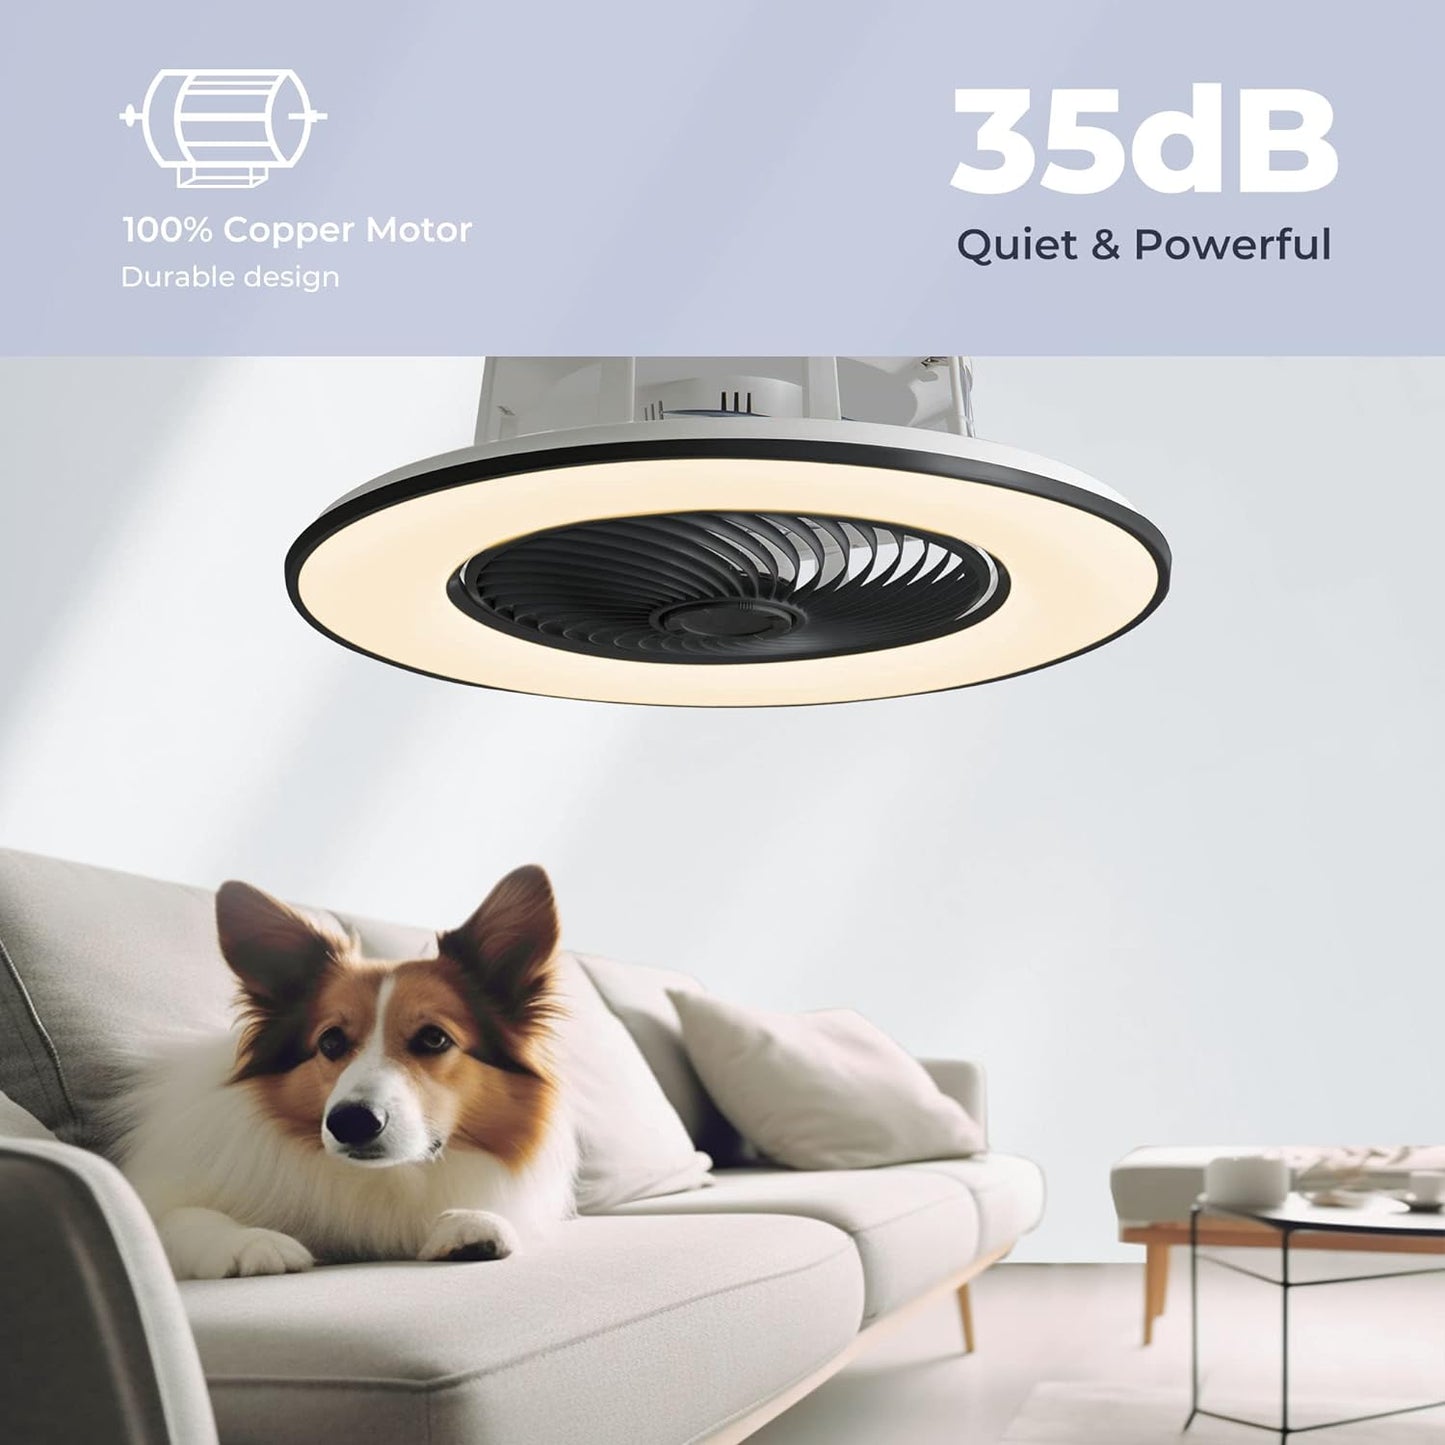 Plafondlamp RGB met ventilator - inclusief afstandsbediening & App